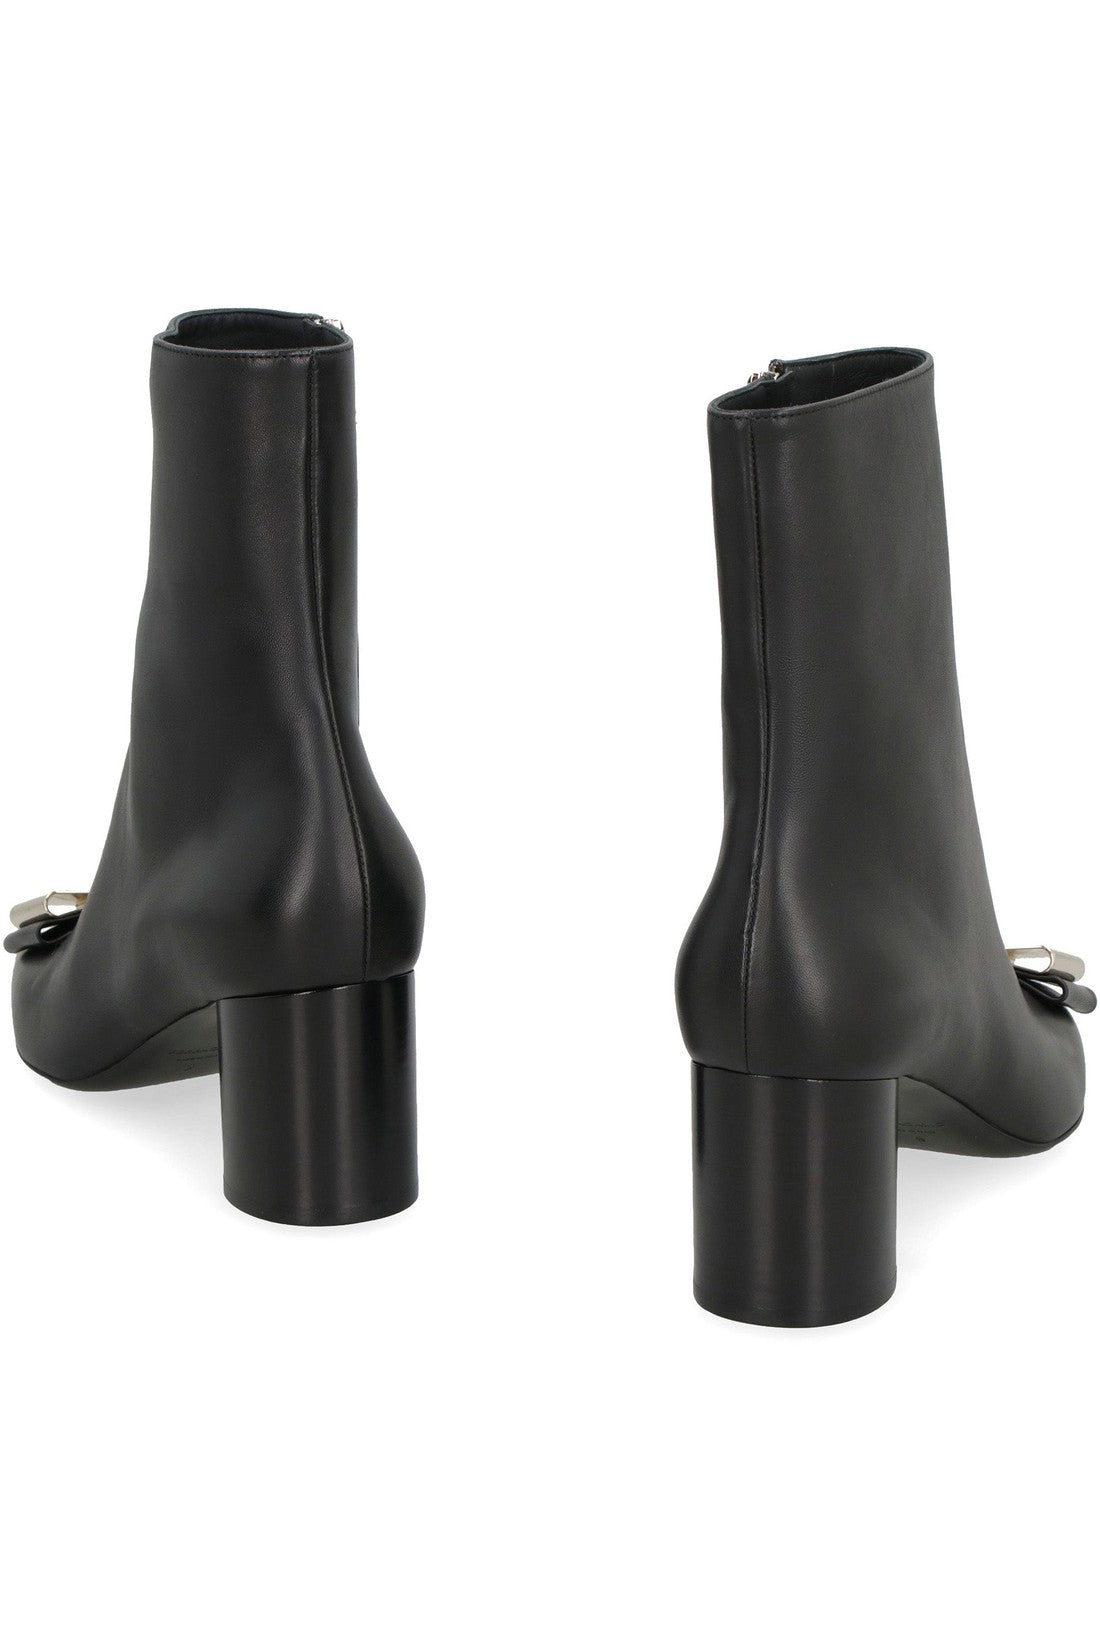 FERRAGAMO-OUTLET-SALE-Leonia leather ankle boots-ARCHIVIST